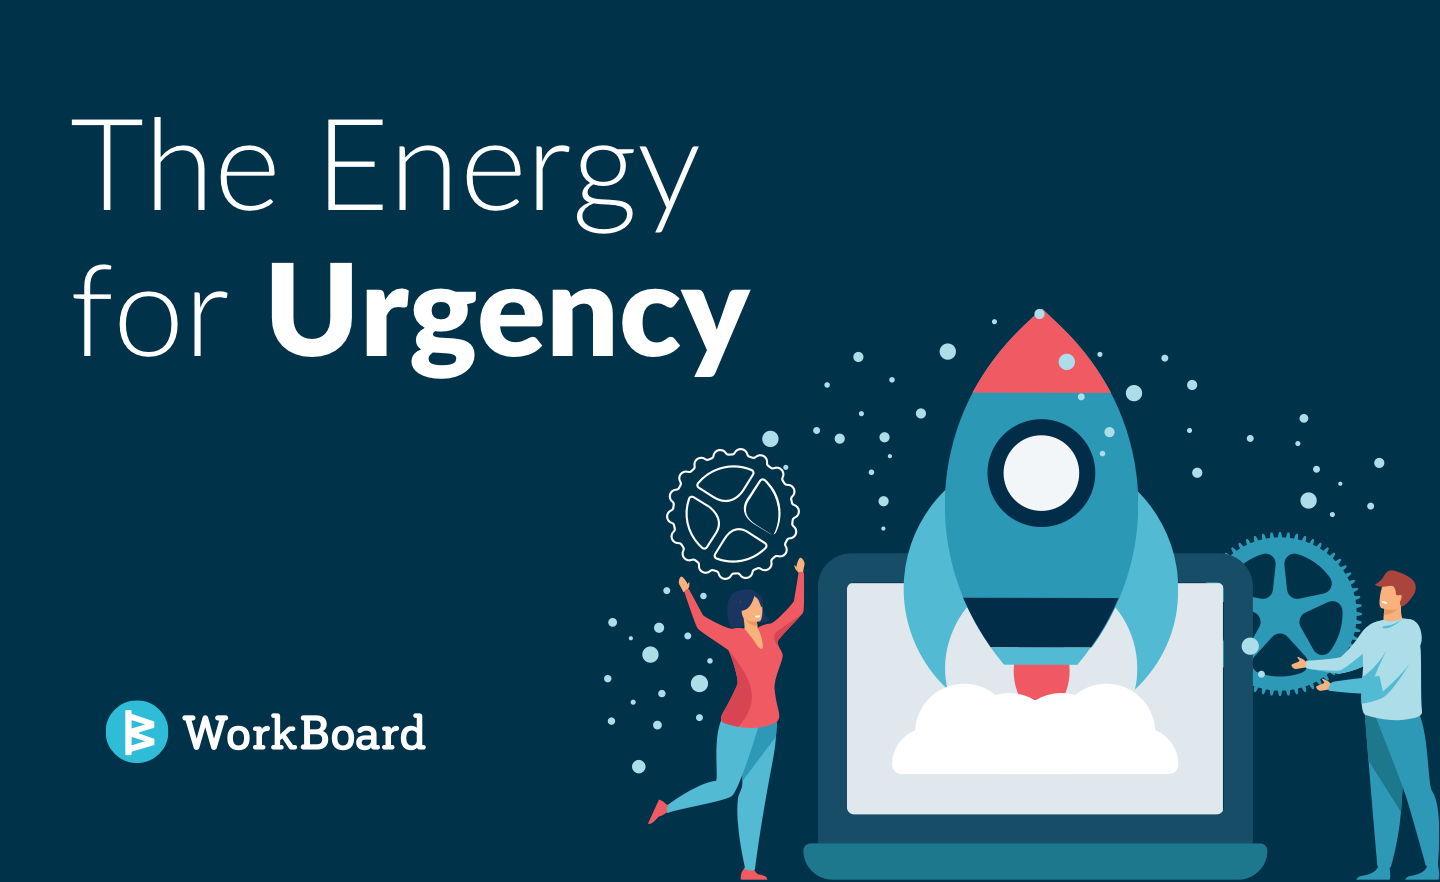 Blog Post: The Energy for Urgency